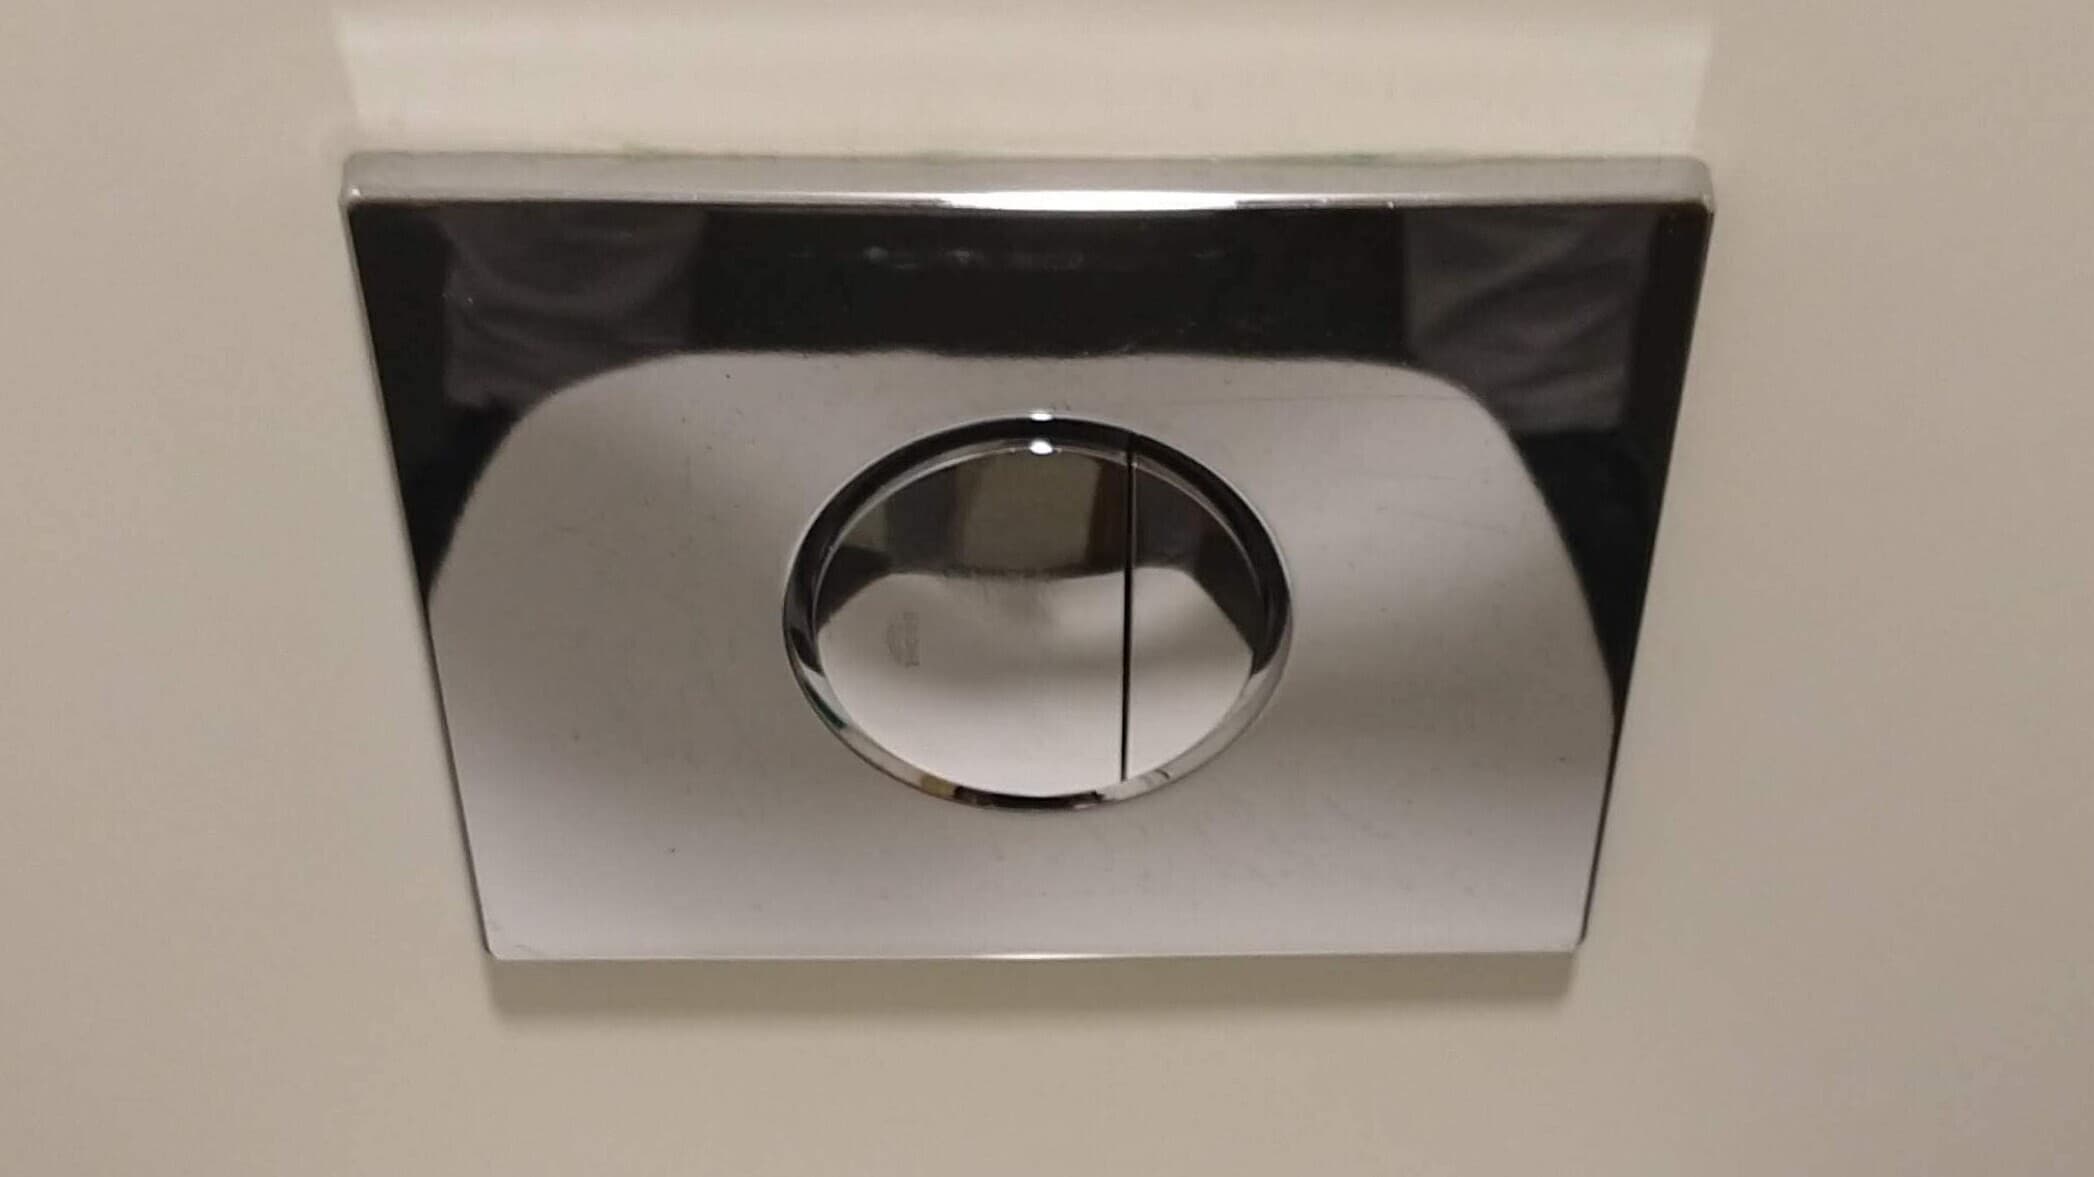 A close-up shot of dual flush toilet buttons